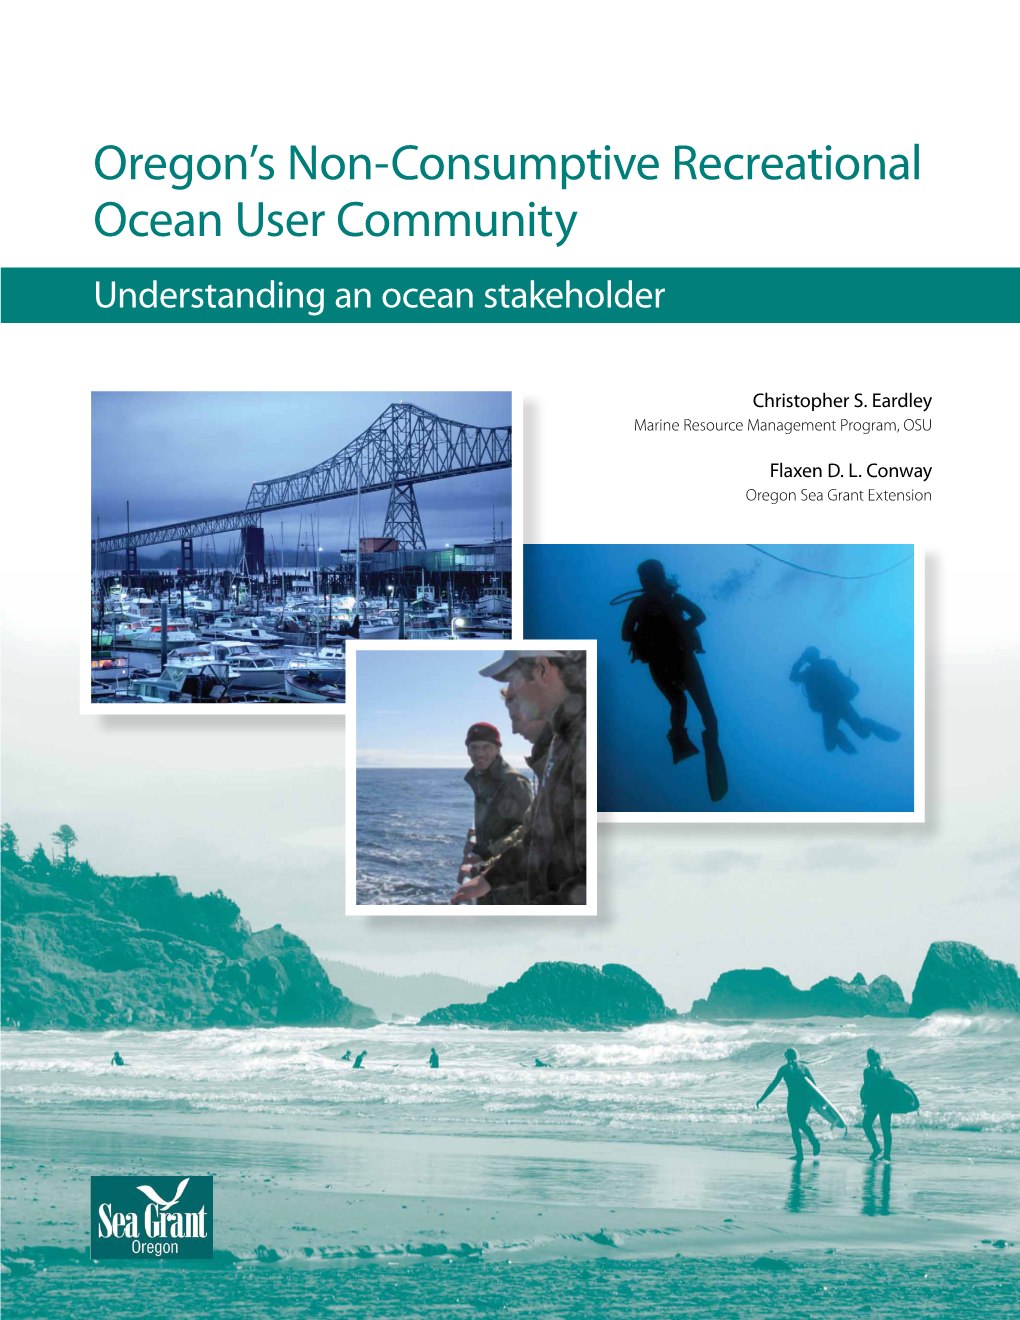 Oregon's Non-Consumptive Recreational Ocean User Community